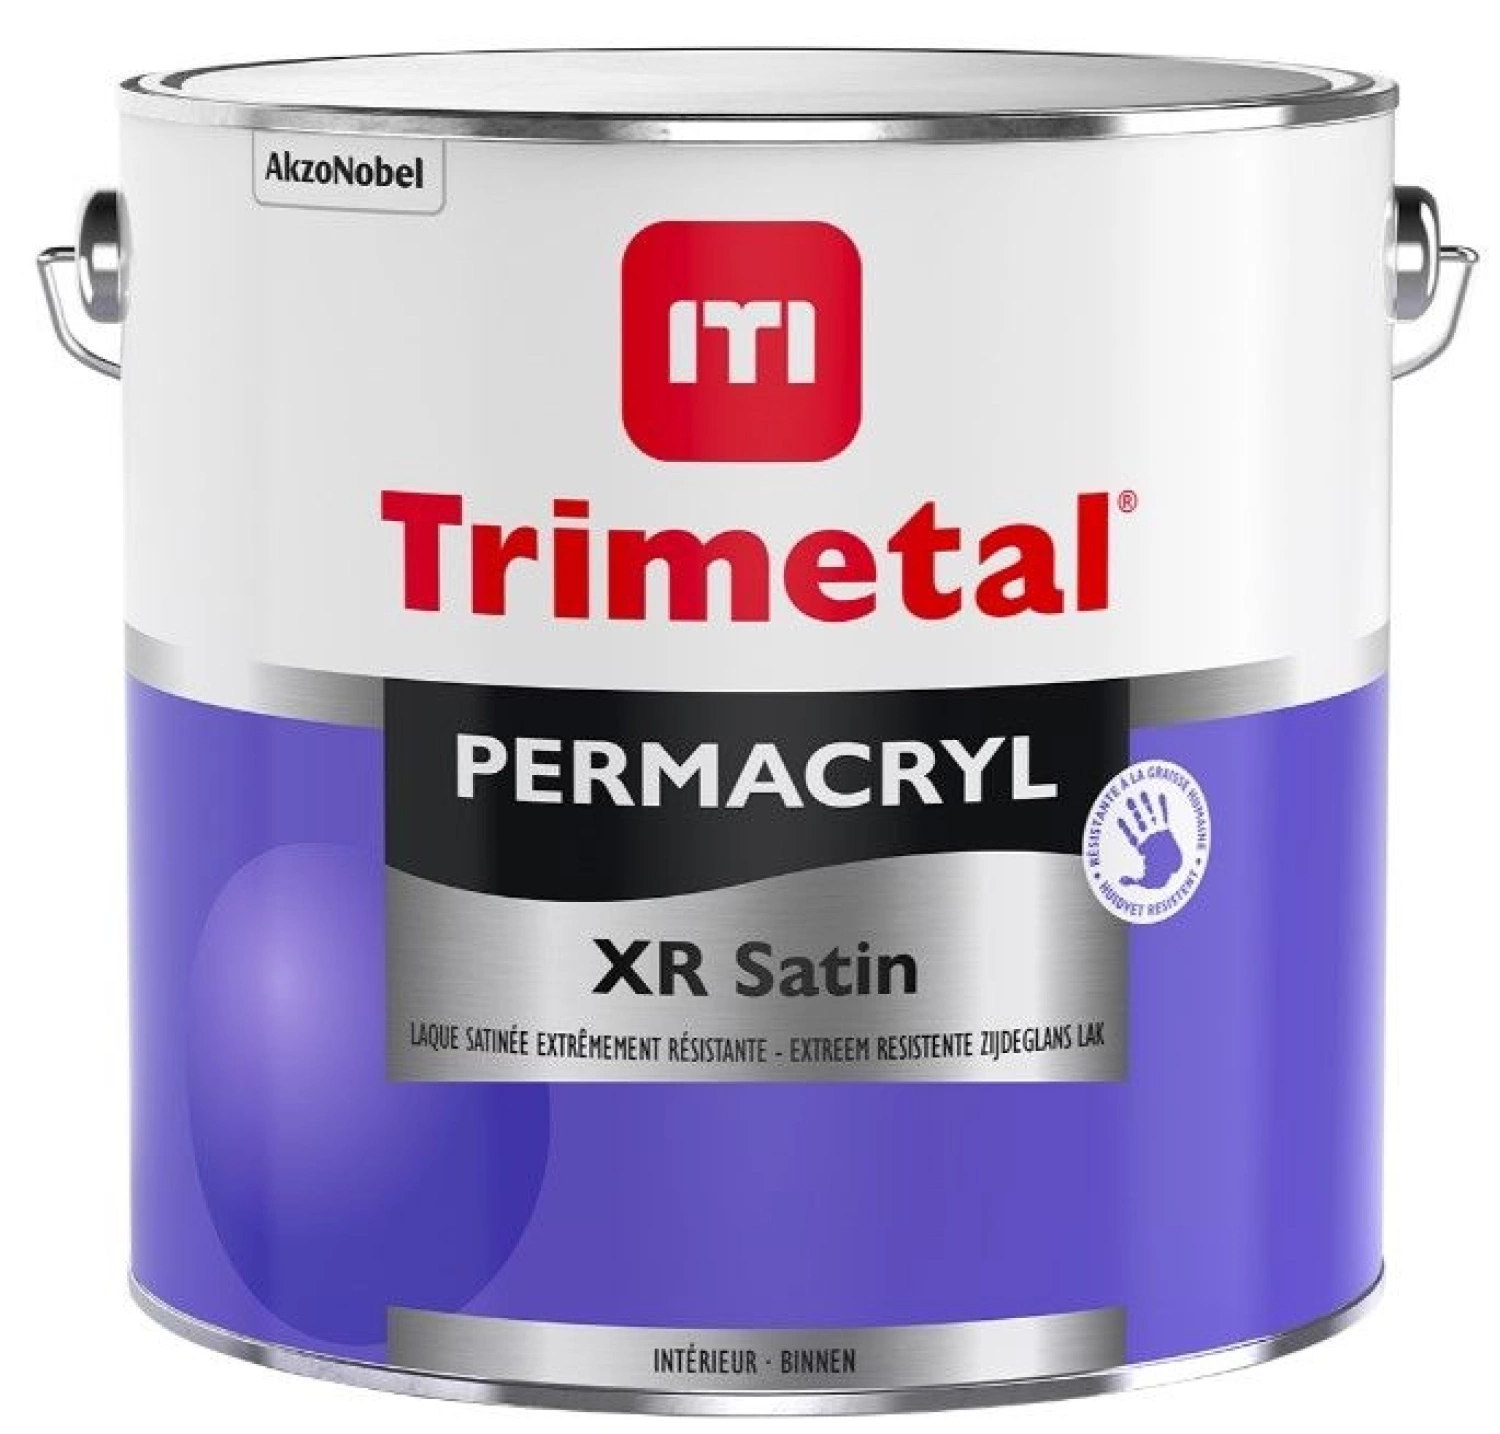 Trimetal Permacryl XR Satin lak - op kleur gemengd - 1L-image